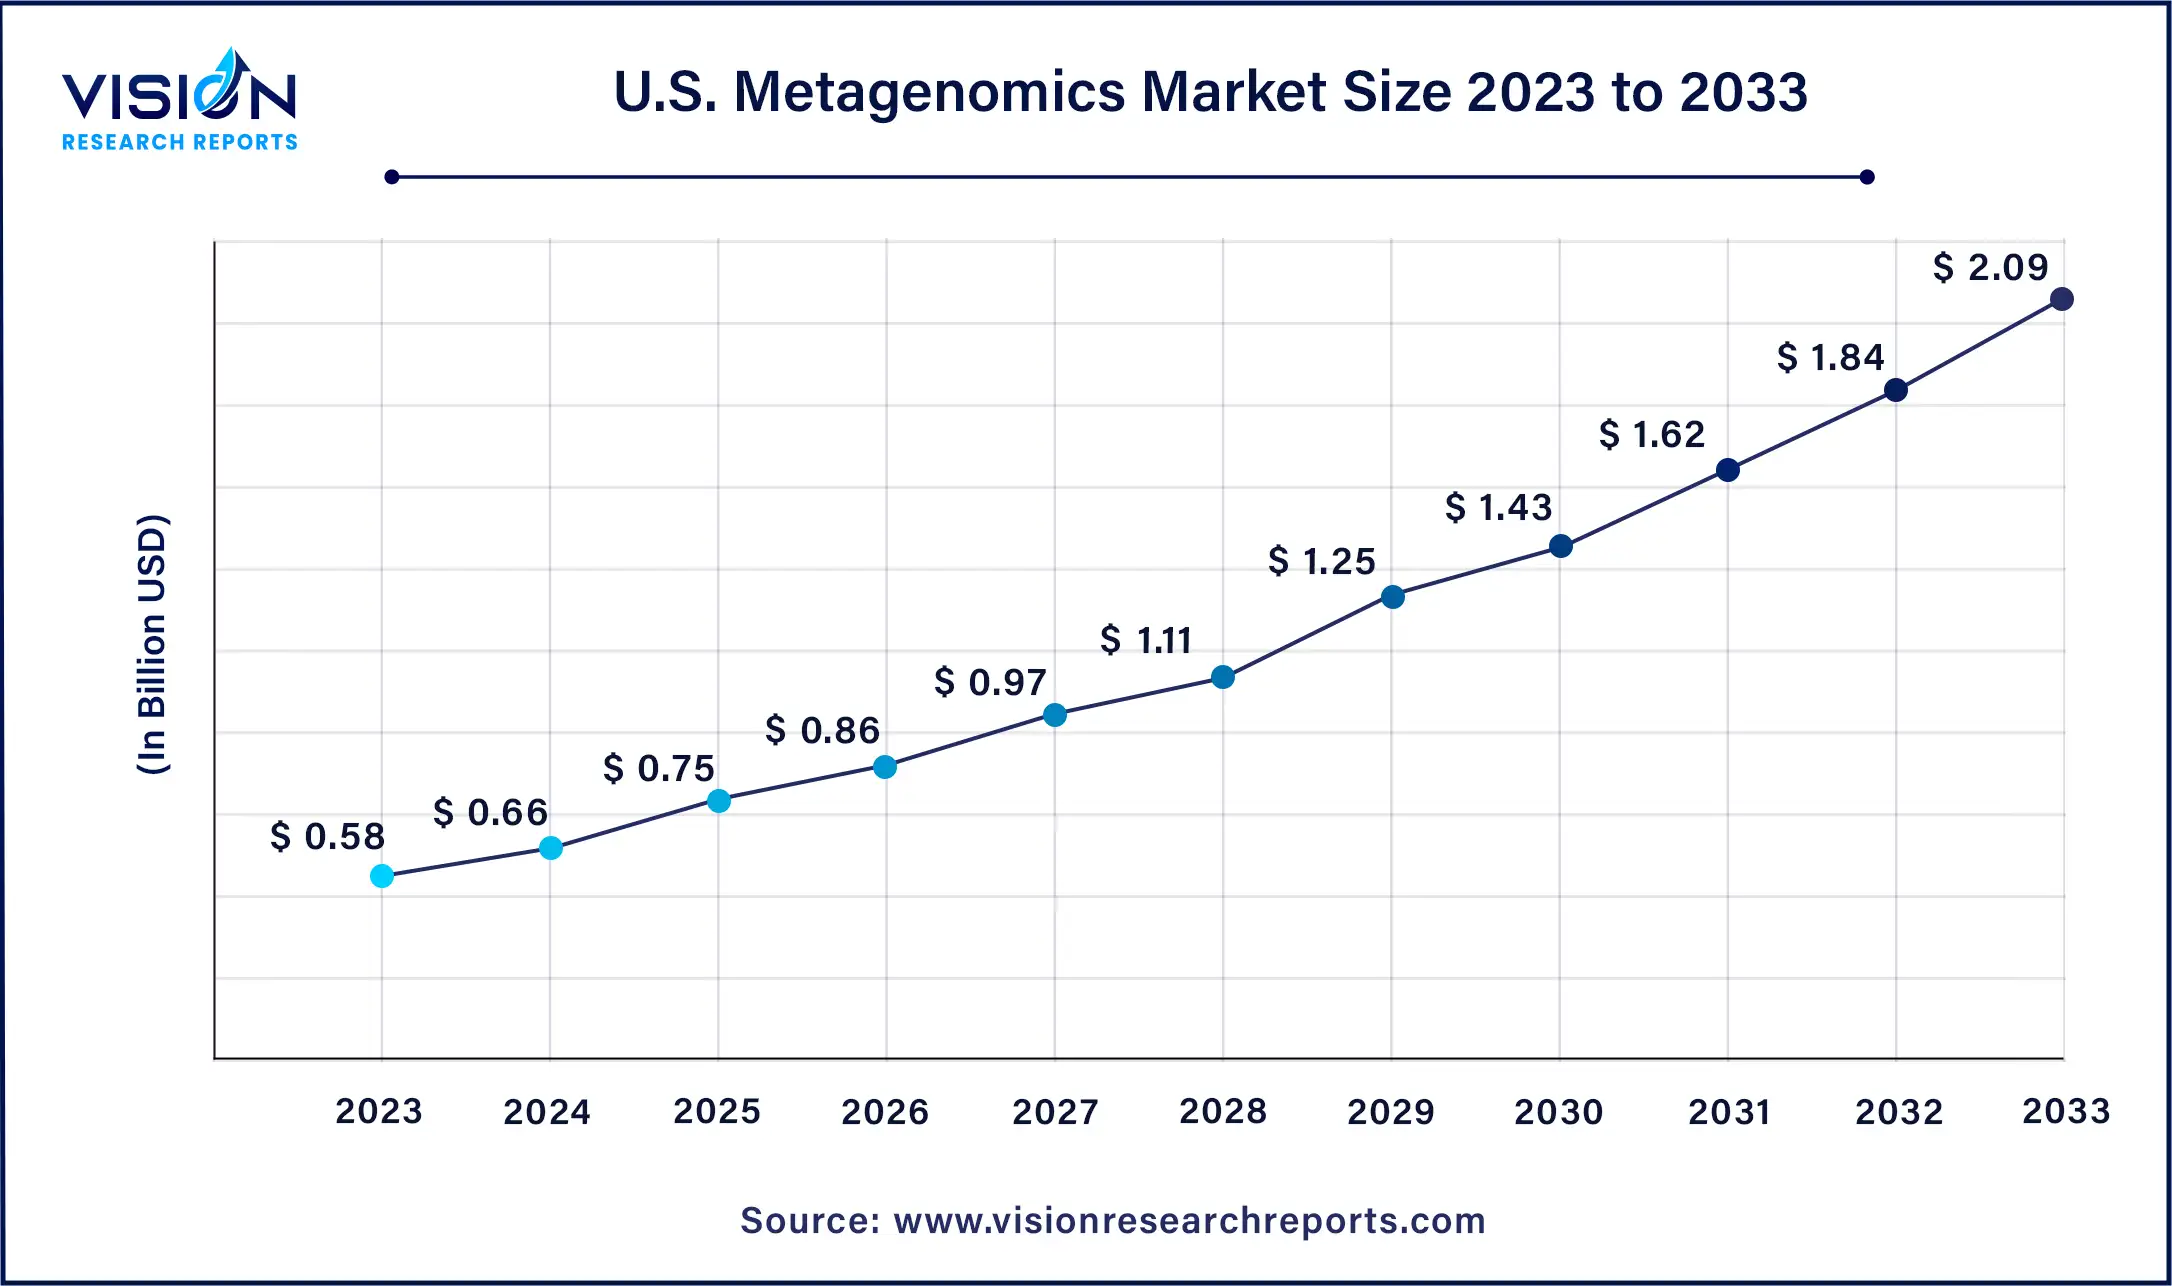 U.S. Metagenomics Market Size 2024 to 2033